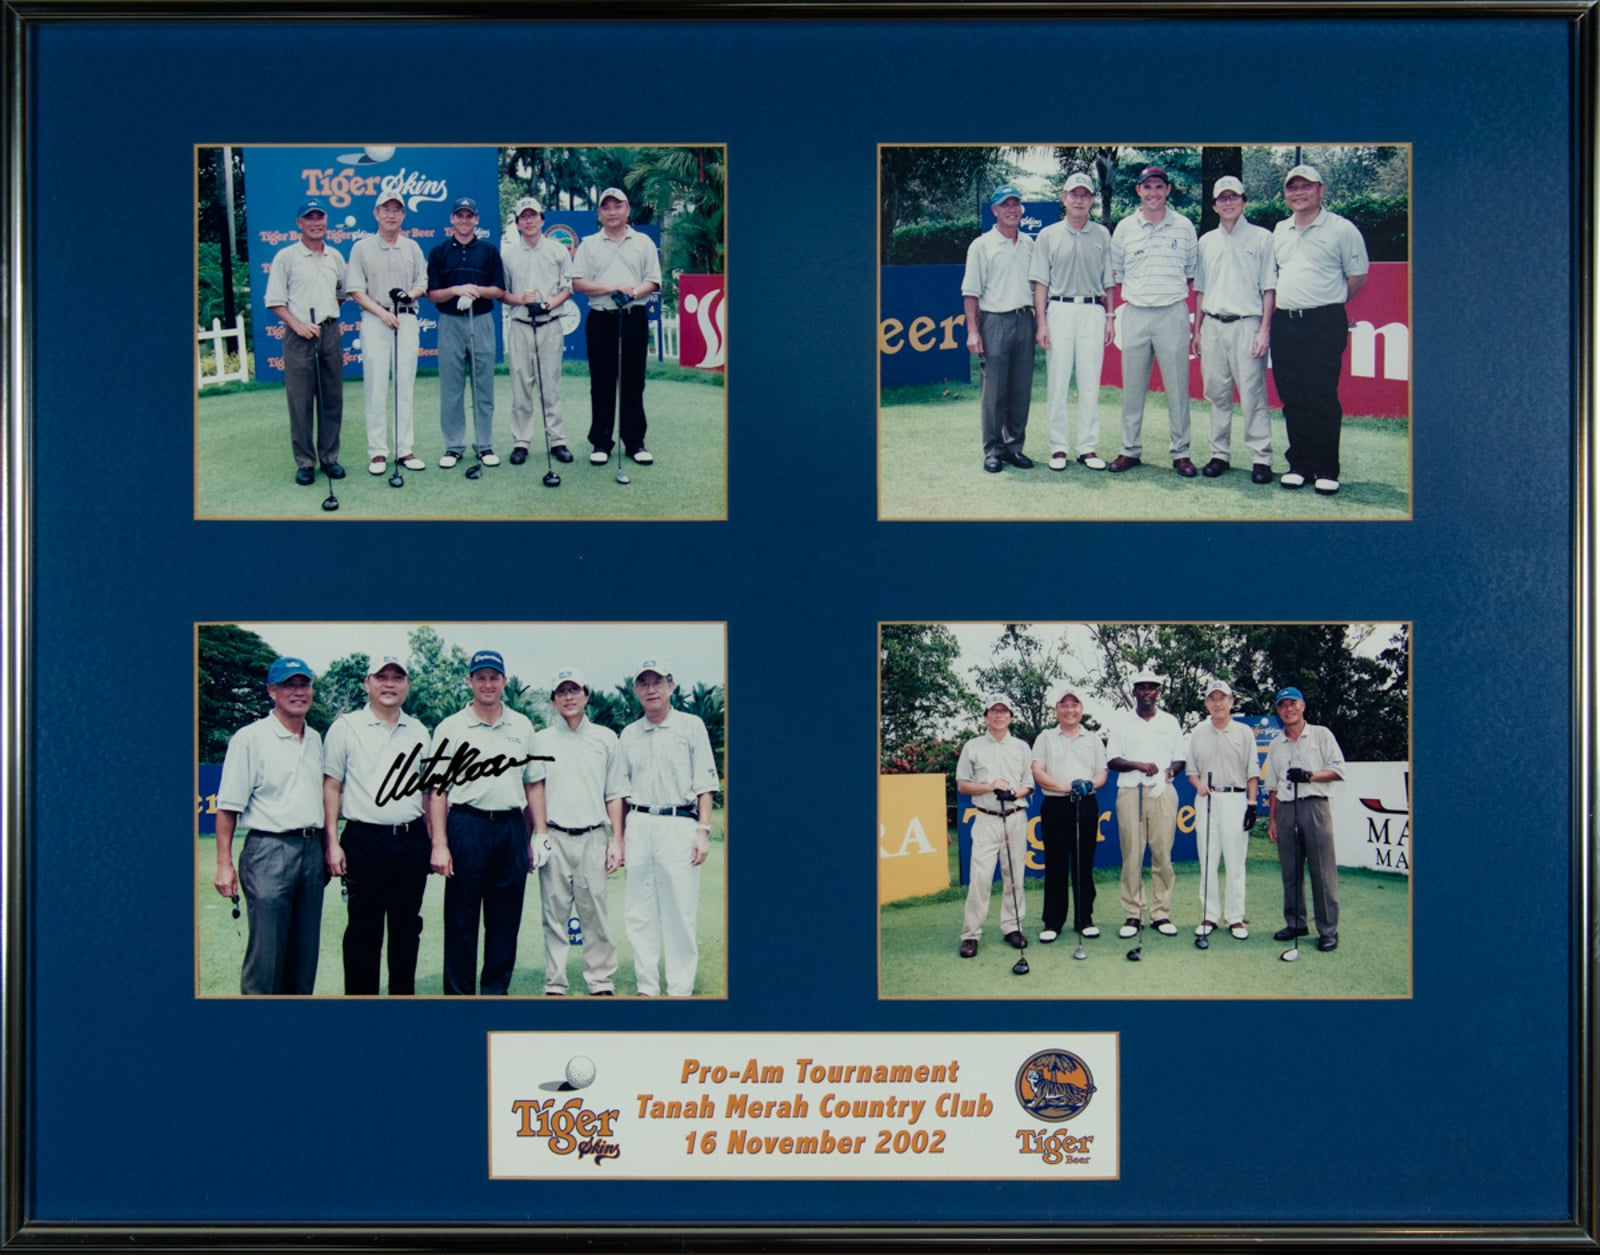 Pro-Am Tournament Photo Collage 2002